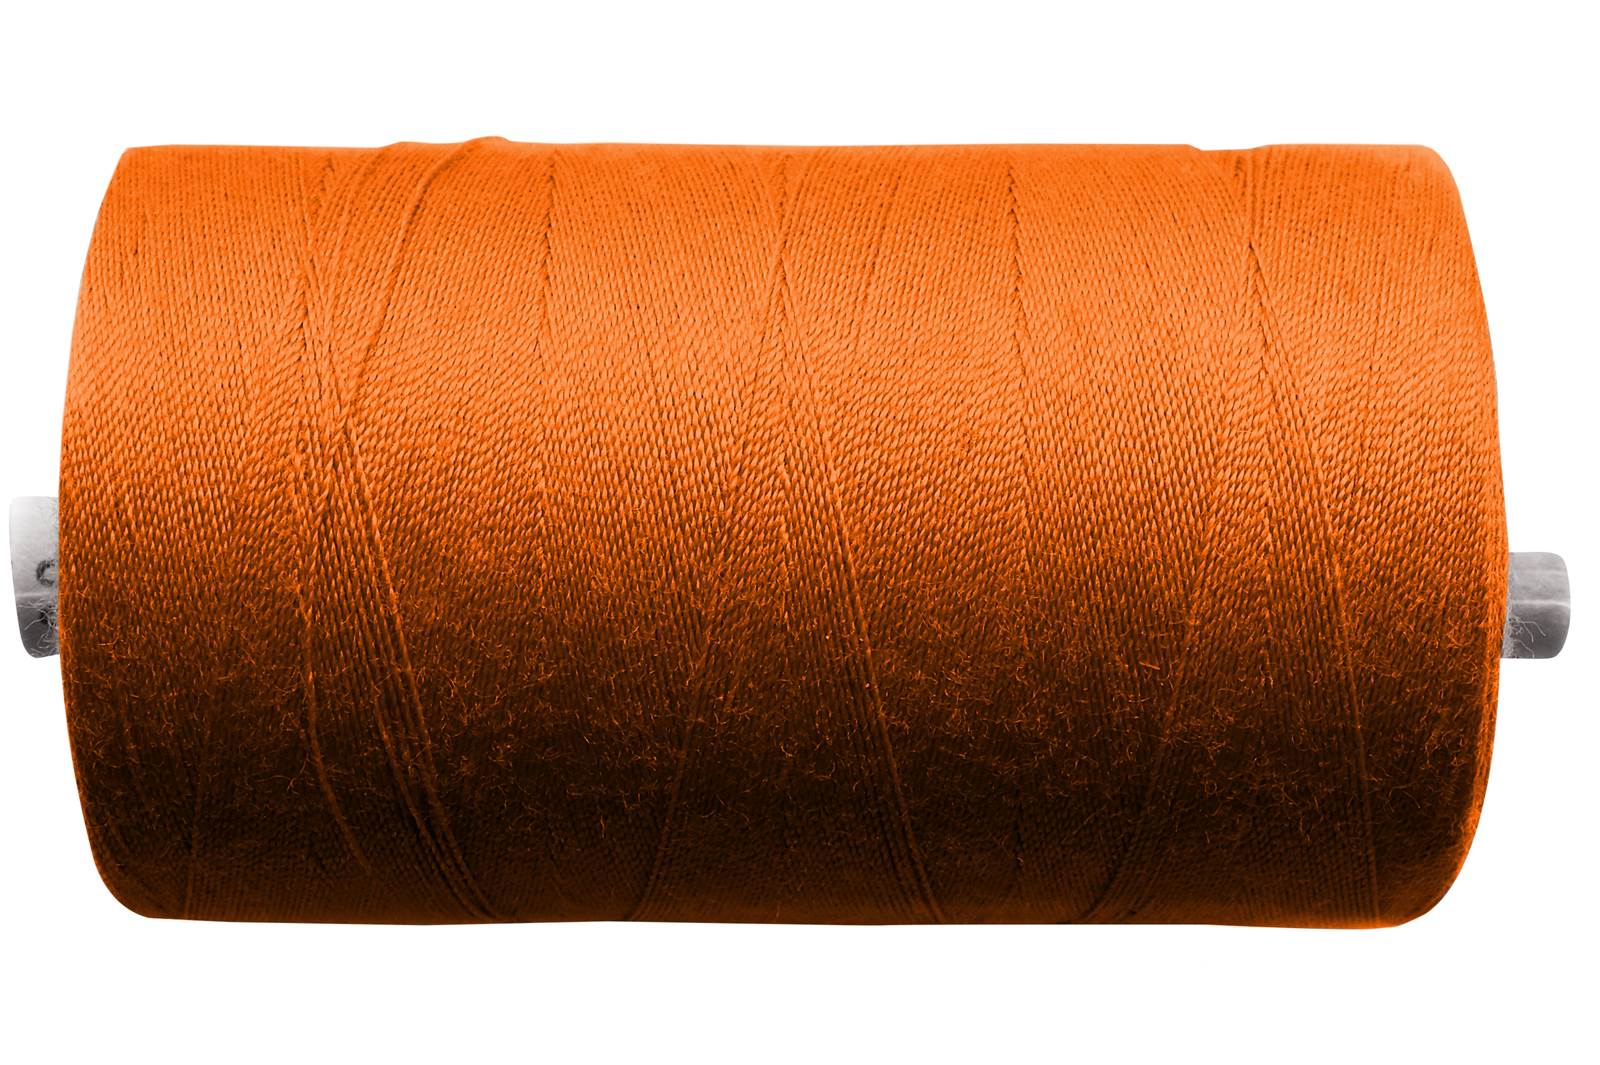 Hilo de coser – Calidad industrial 100 - Naranja